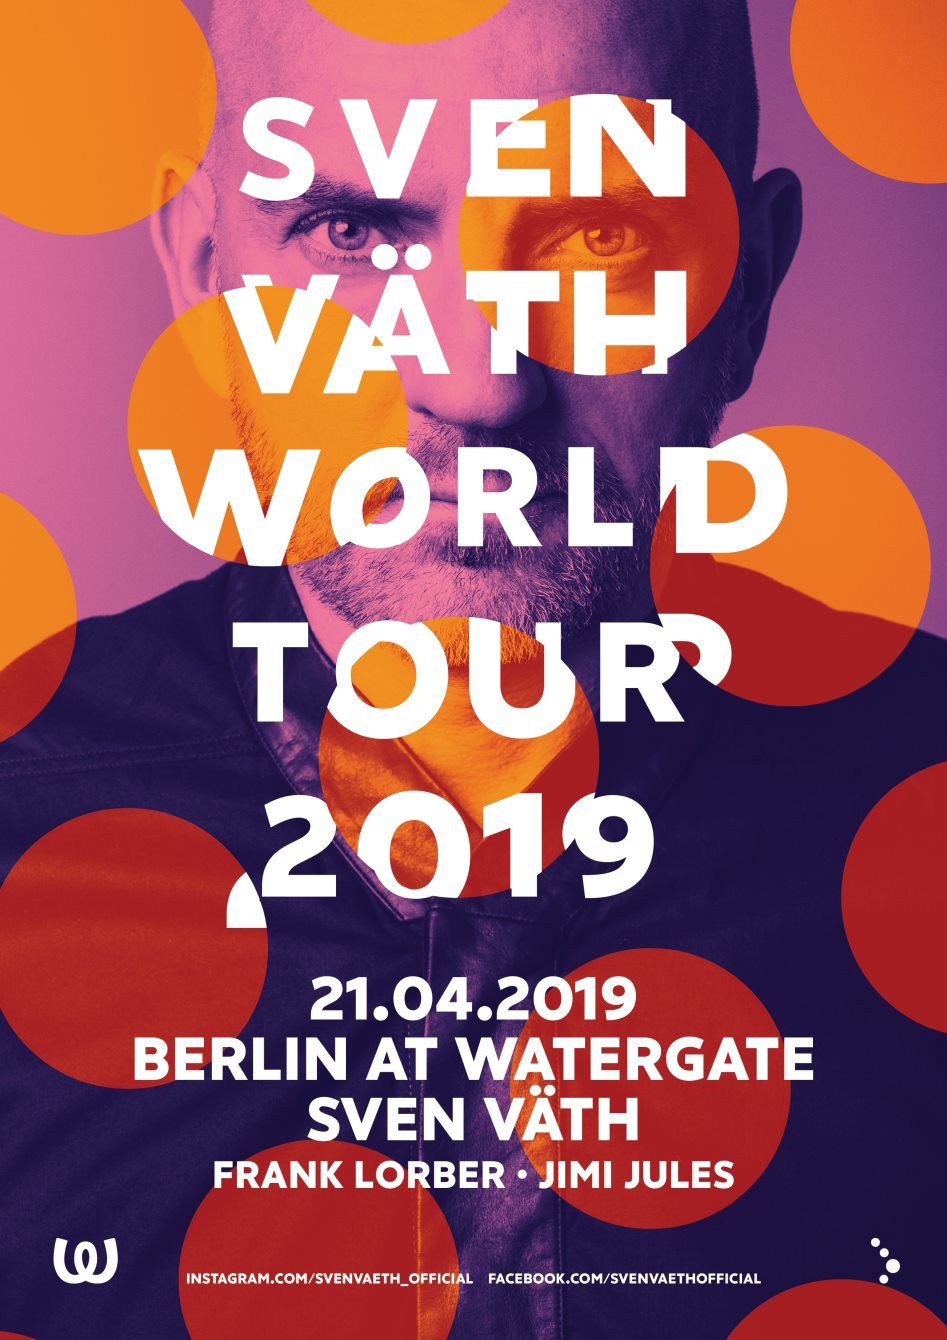 Sven Väth World Tour 2019 - Flyer front